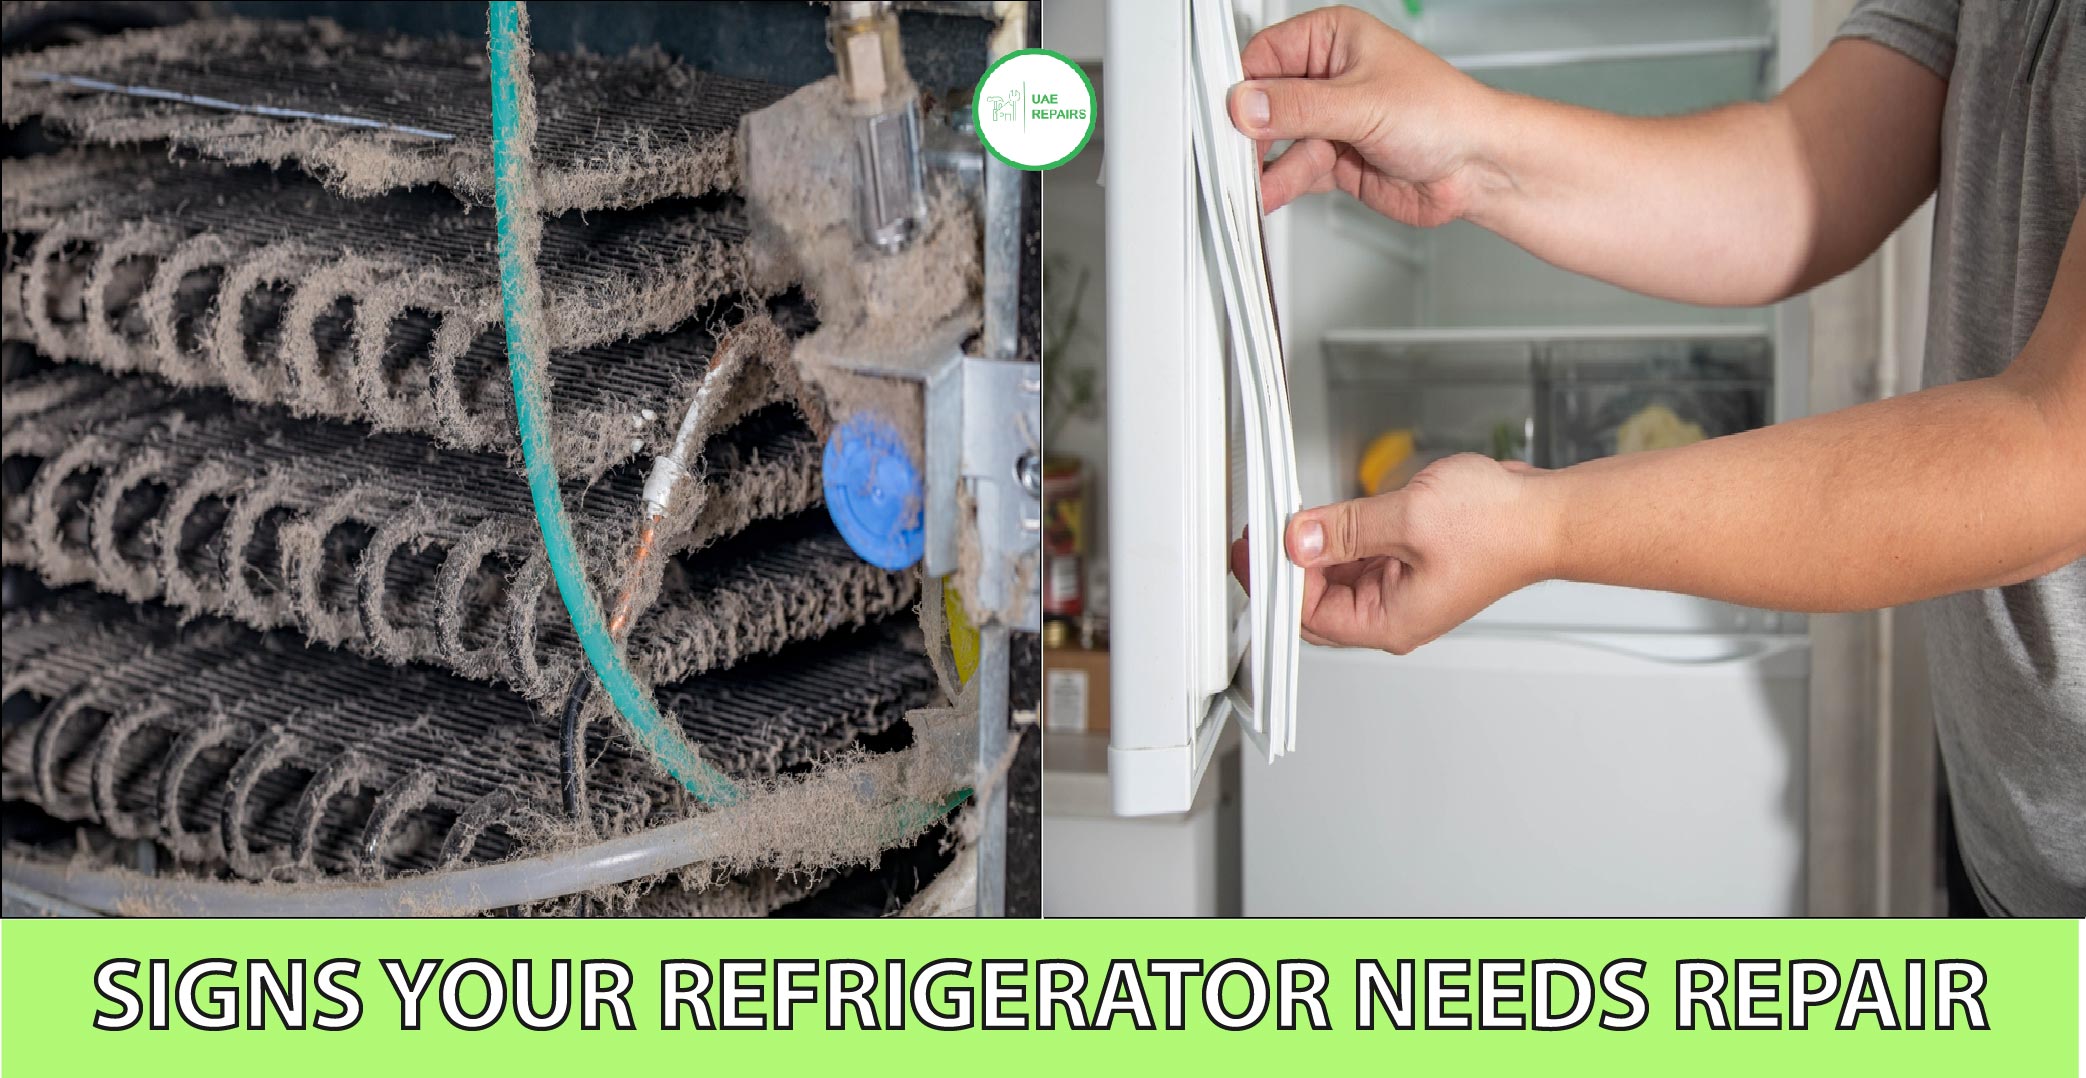 Refrigerator not working Refrigerator not Cooling Strange noises from refrigerator Water Leakage inside refrigerator